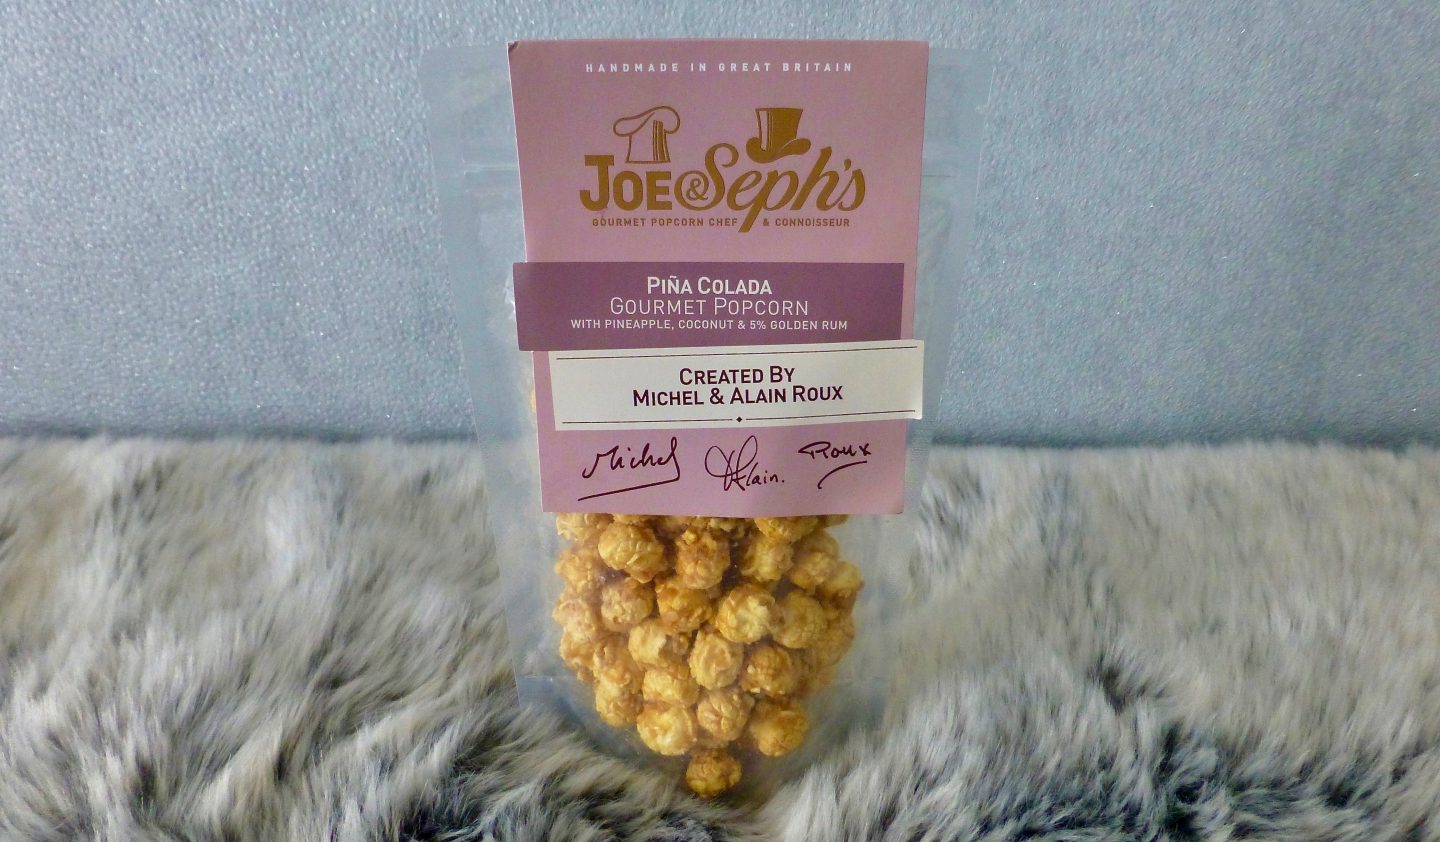 Joe & Seph's Pina Colada Popcorn